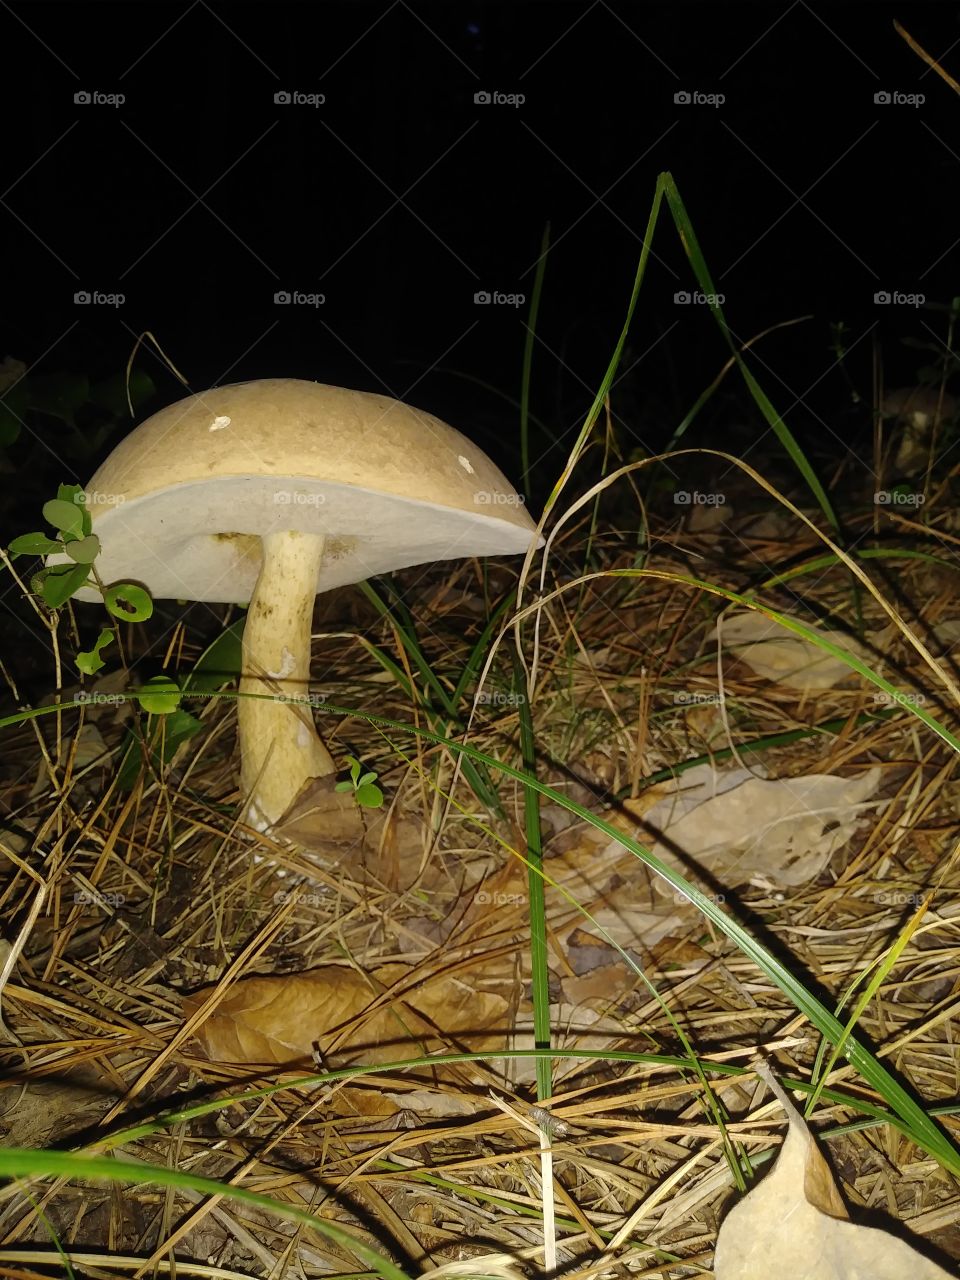 Bolete mushroom at dusk in natural pine forest habitat